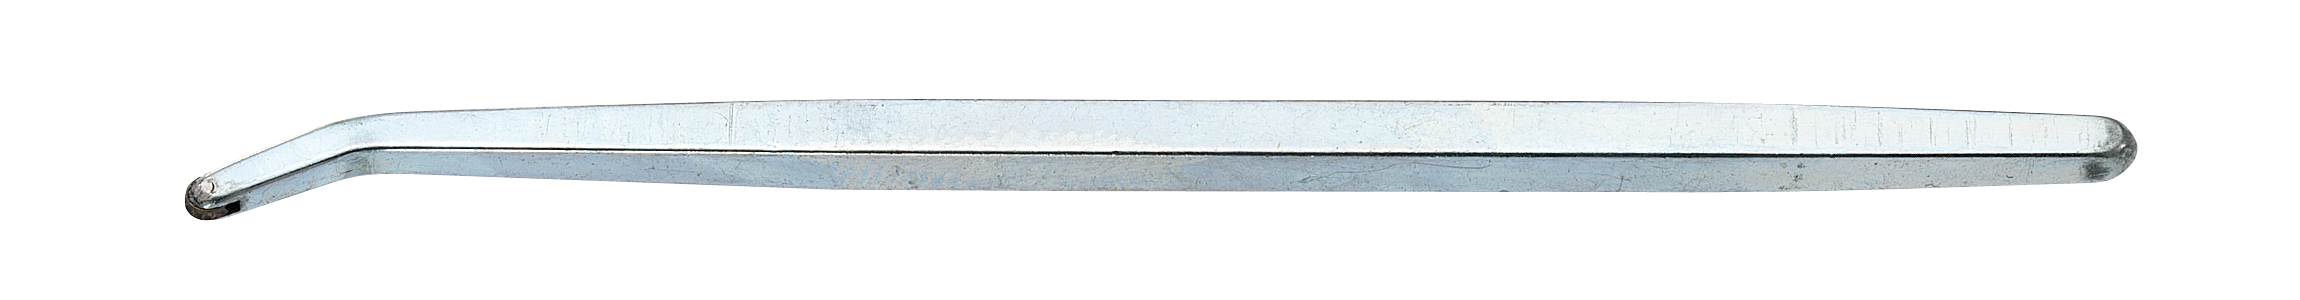 Millgrain tool Type 8 coarse